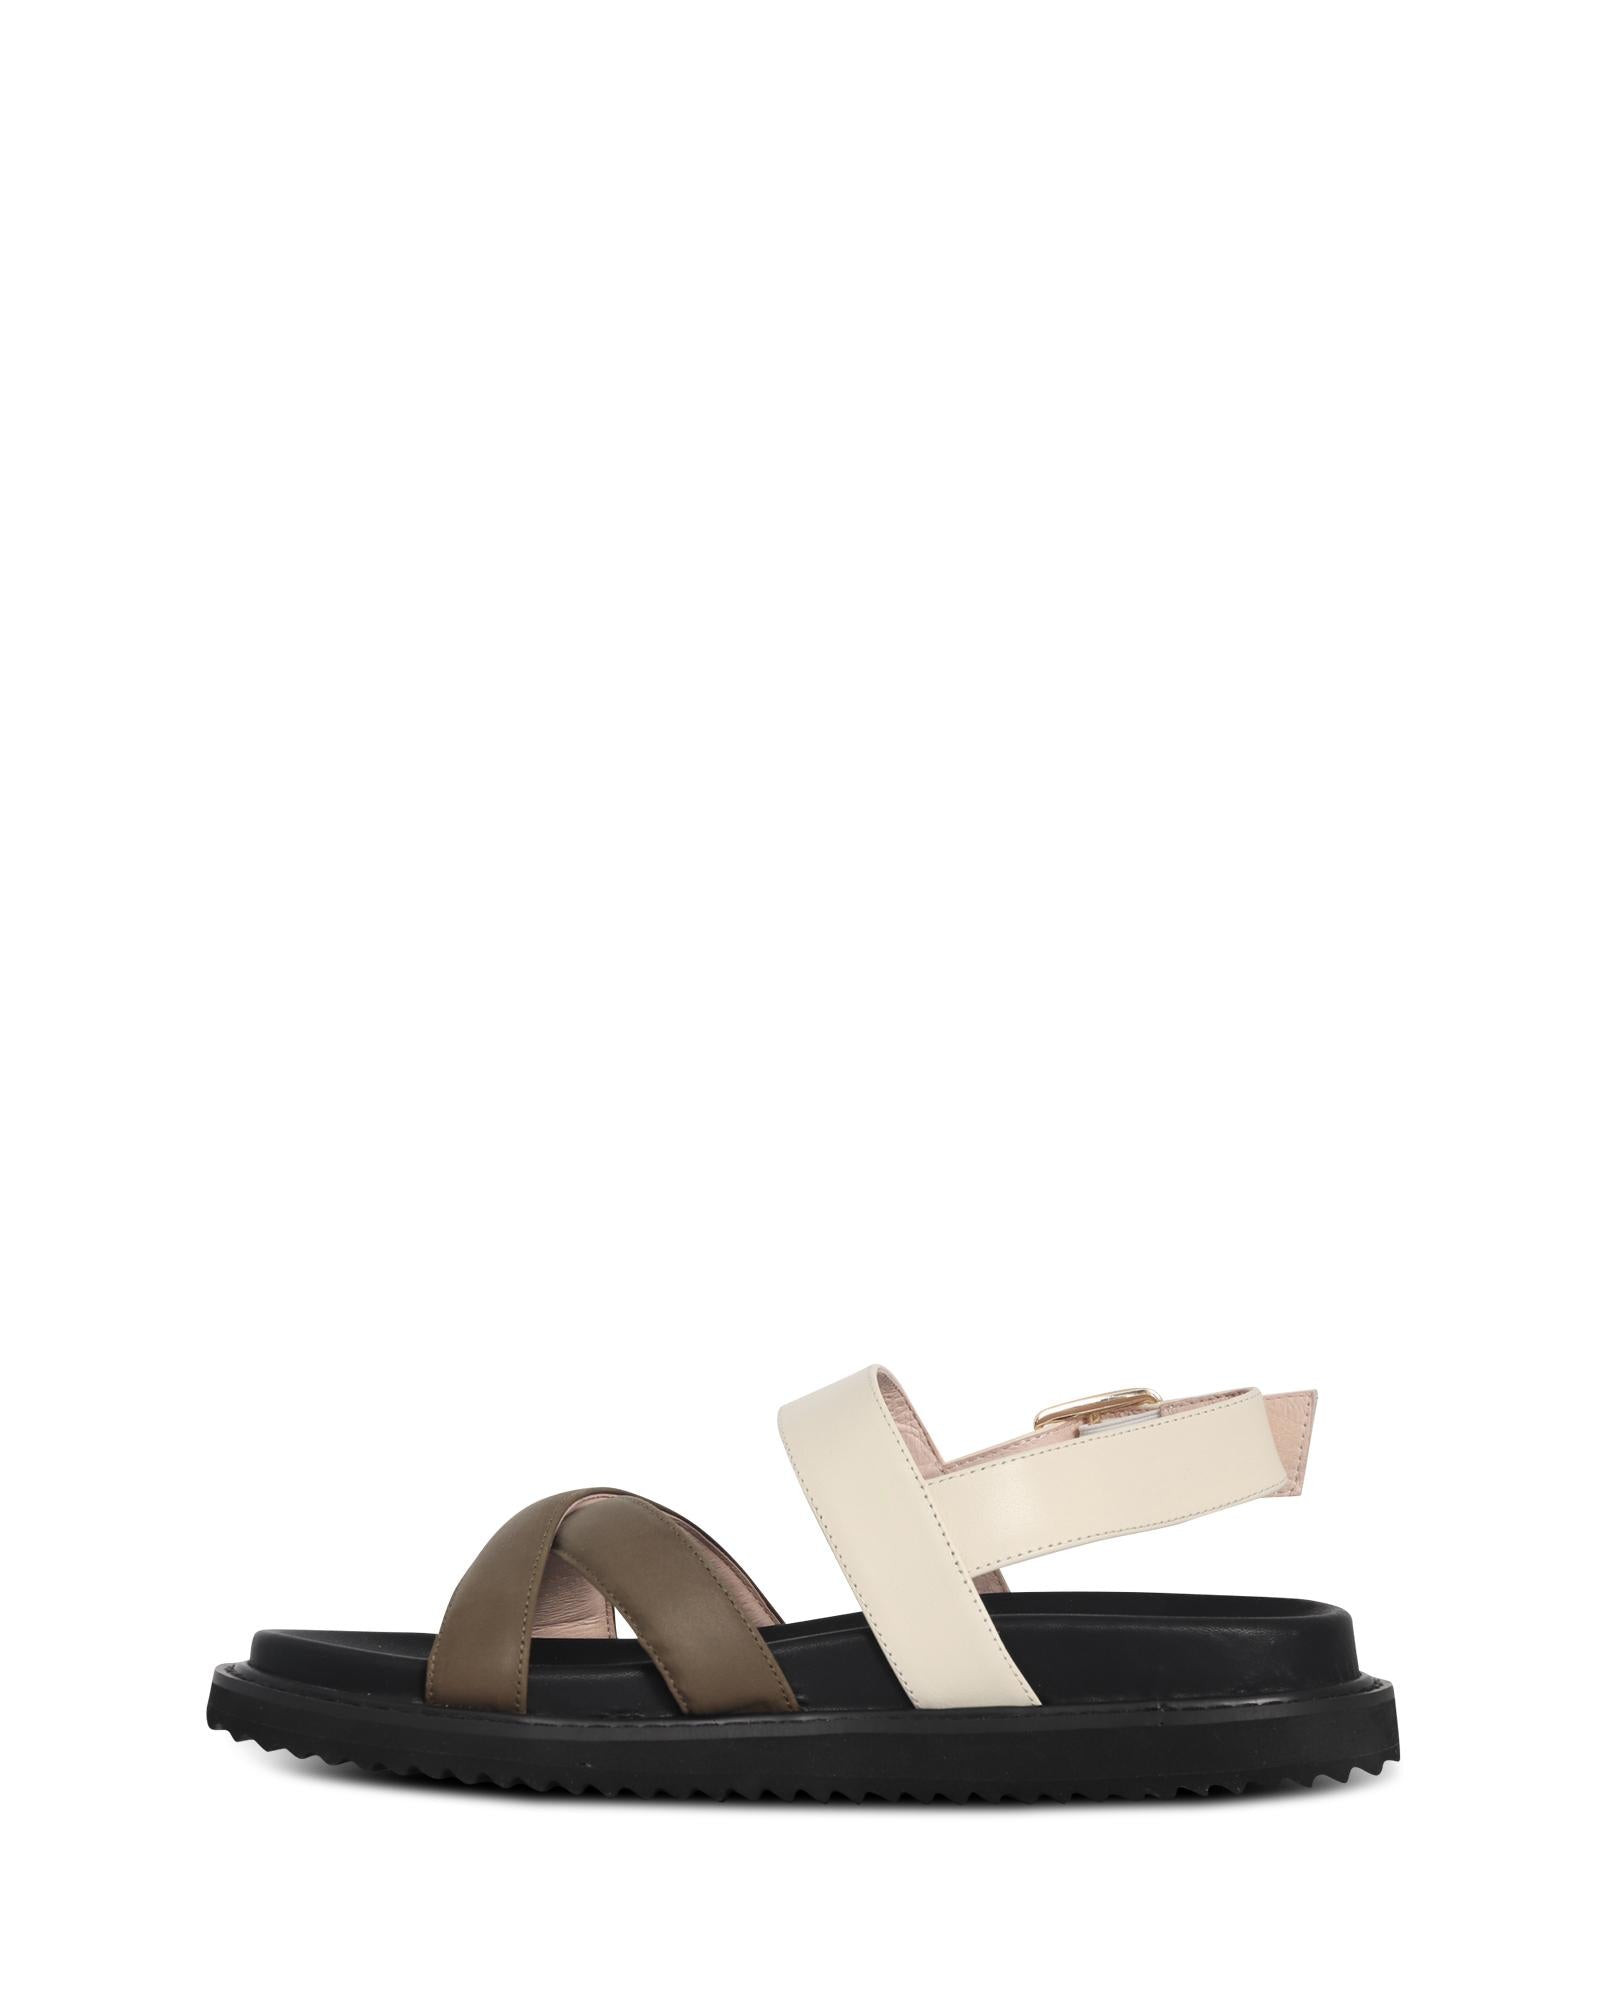 Marlowe Olive/White 2cm Sandal